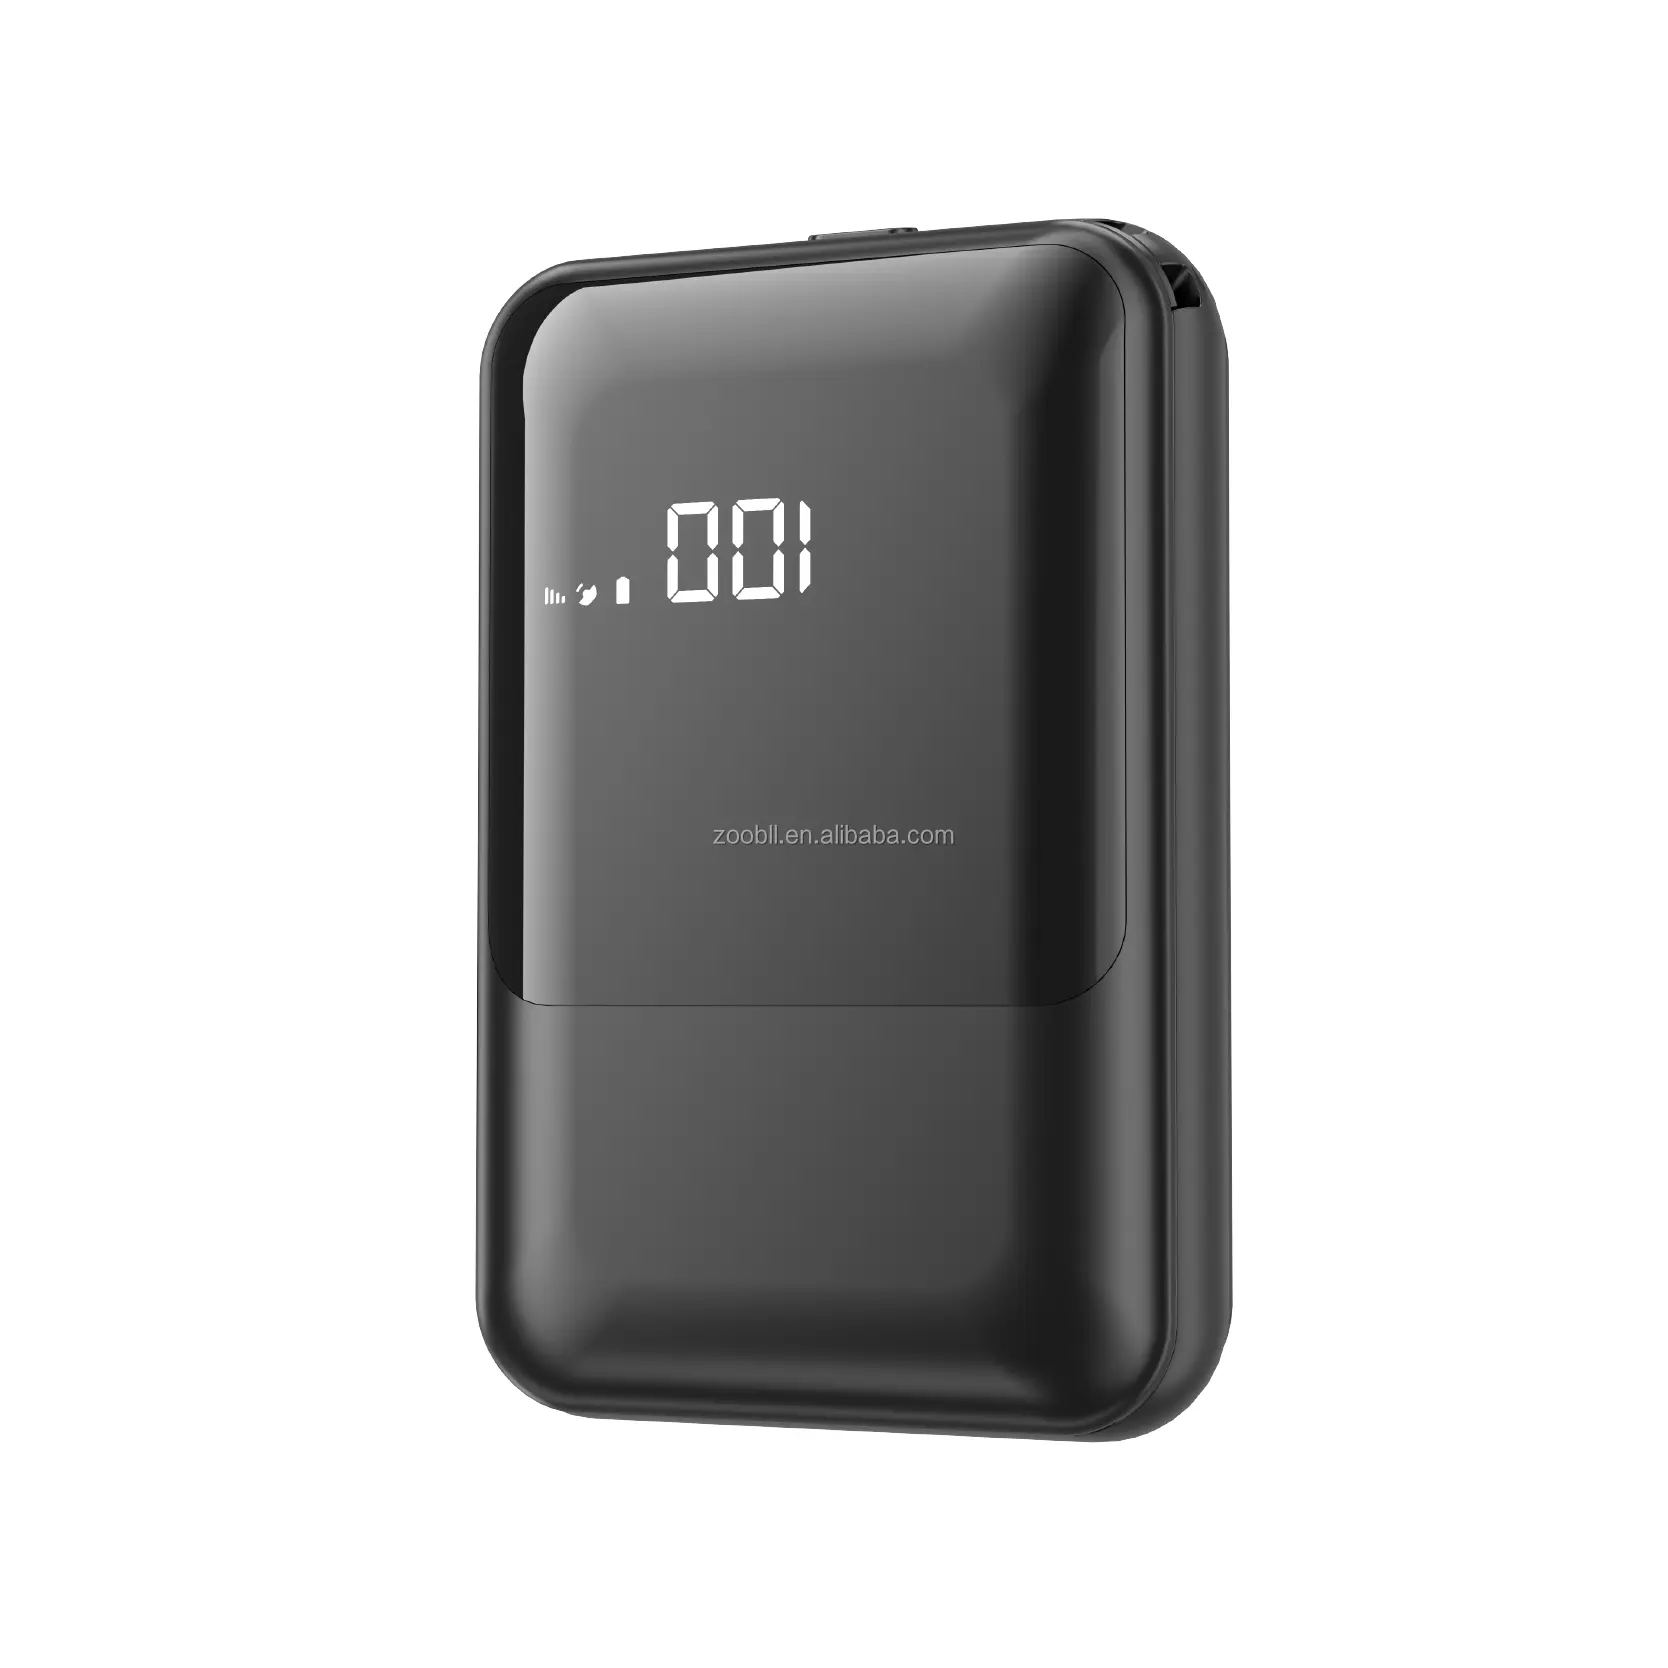 Original ZOOBII P6 4G Mini Wireless Gps Tracker with great price